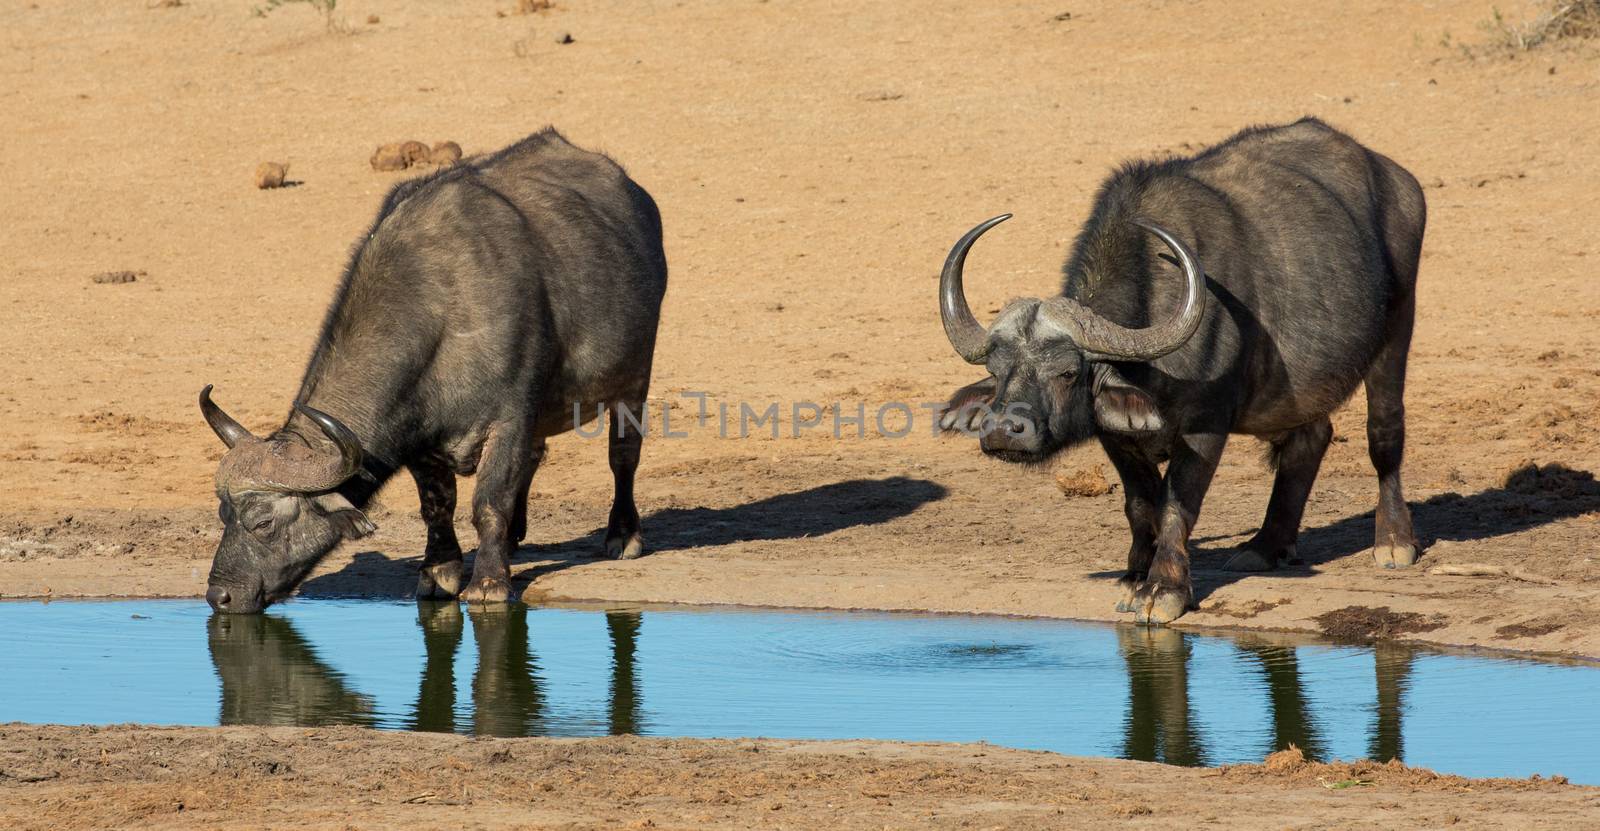 Buffalo Bulls with Large Horns at Waterhole by fouroaks